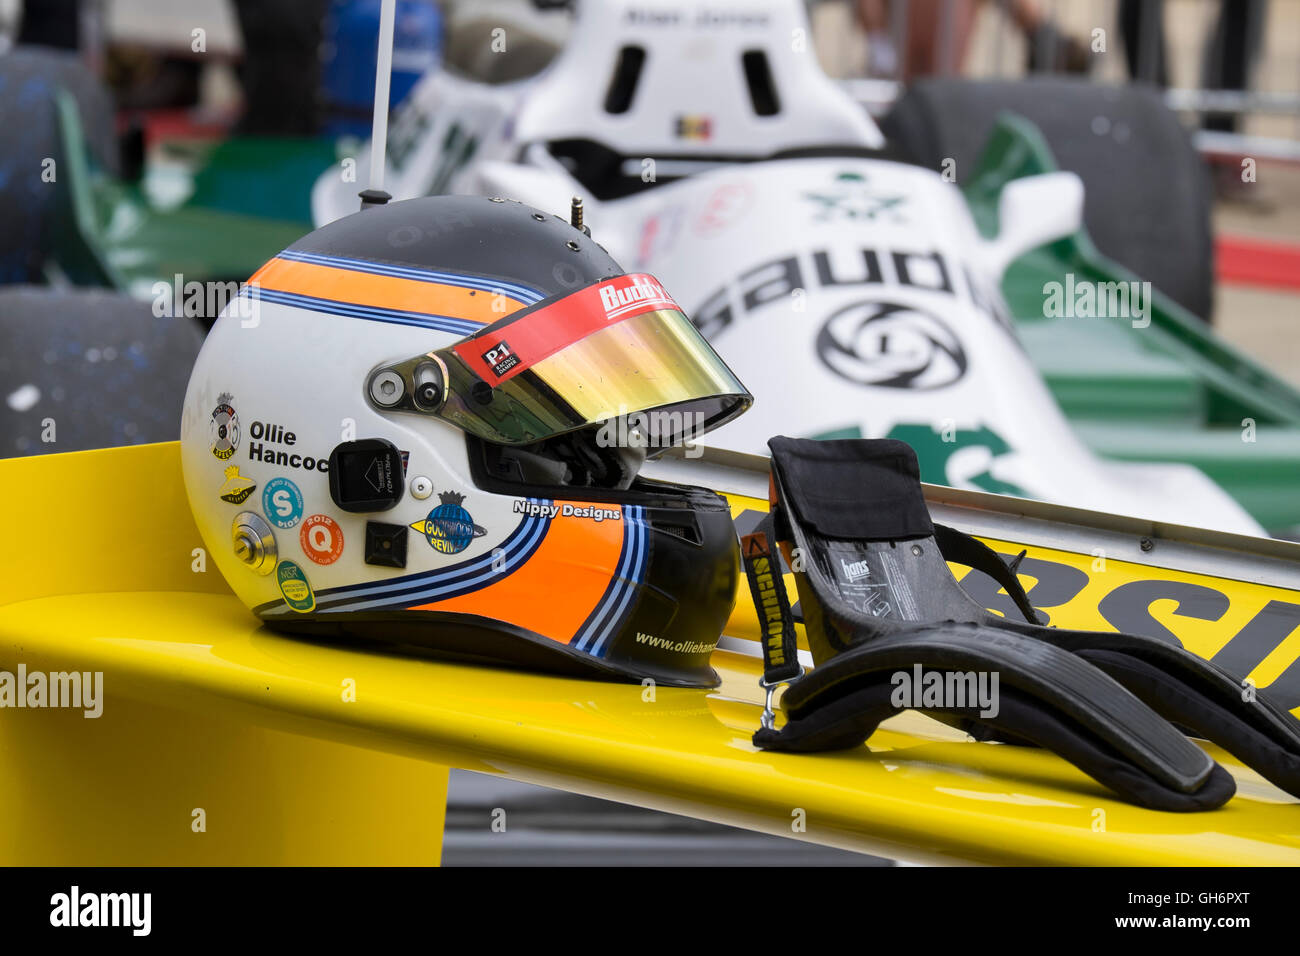 Ollie Hancock's helmet on his Fittipaldi F5A, FIA Masters Historic Formula 1 race, 2016 Silverstone Classic event, UK Stock Photo